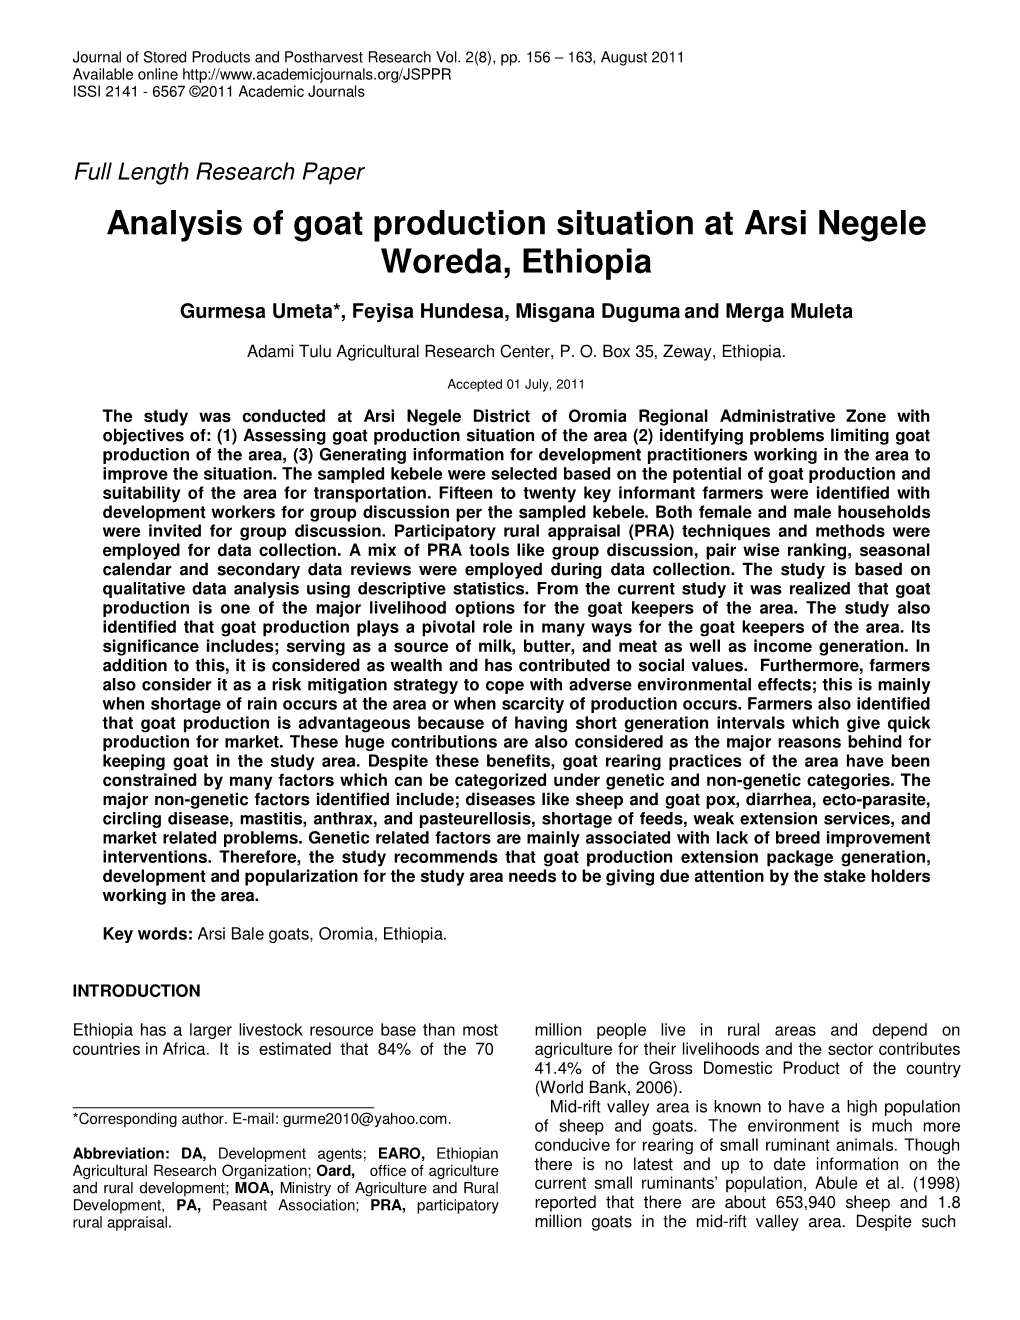 Analysis of Goat Production Situation at Arsi Negele Woreda, Ethiopia